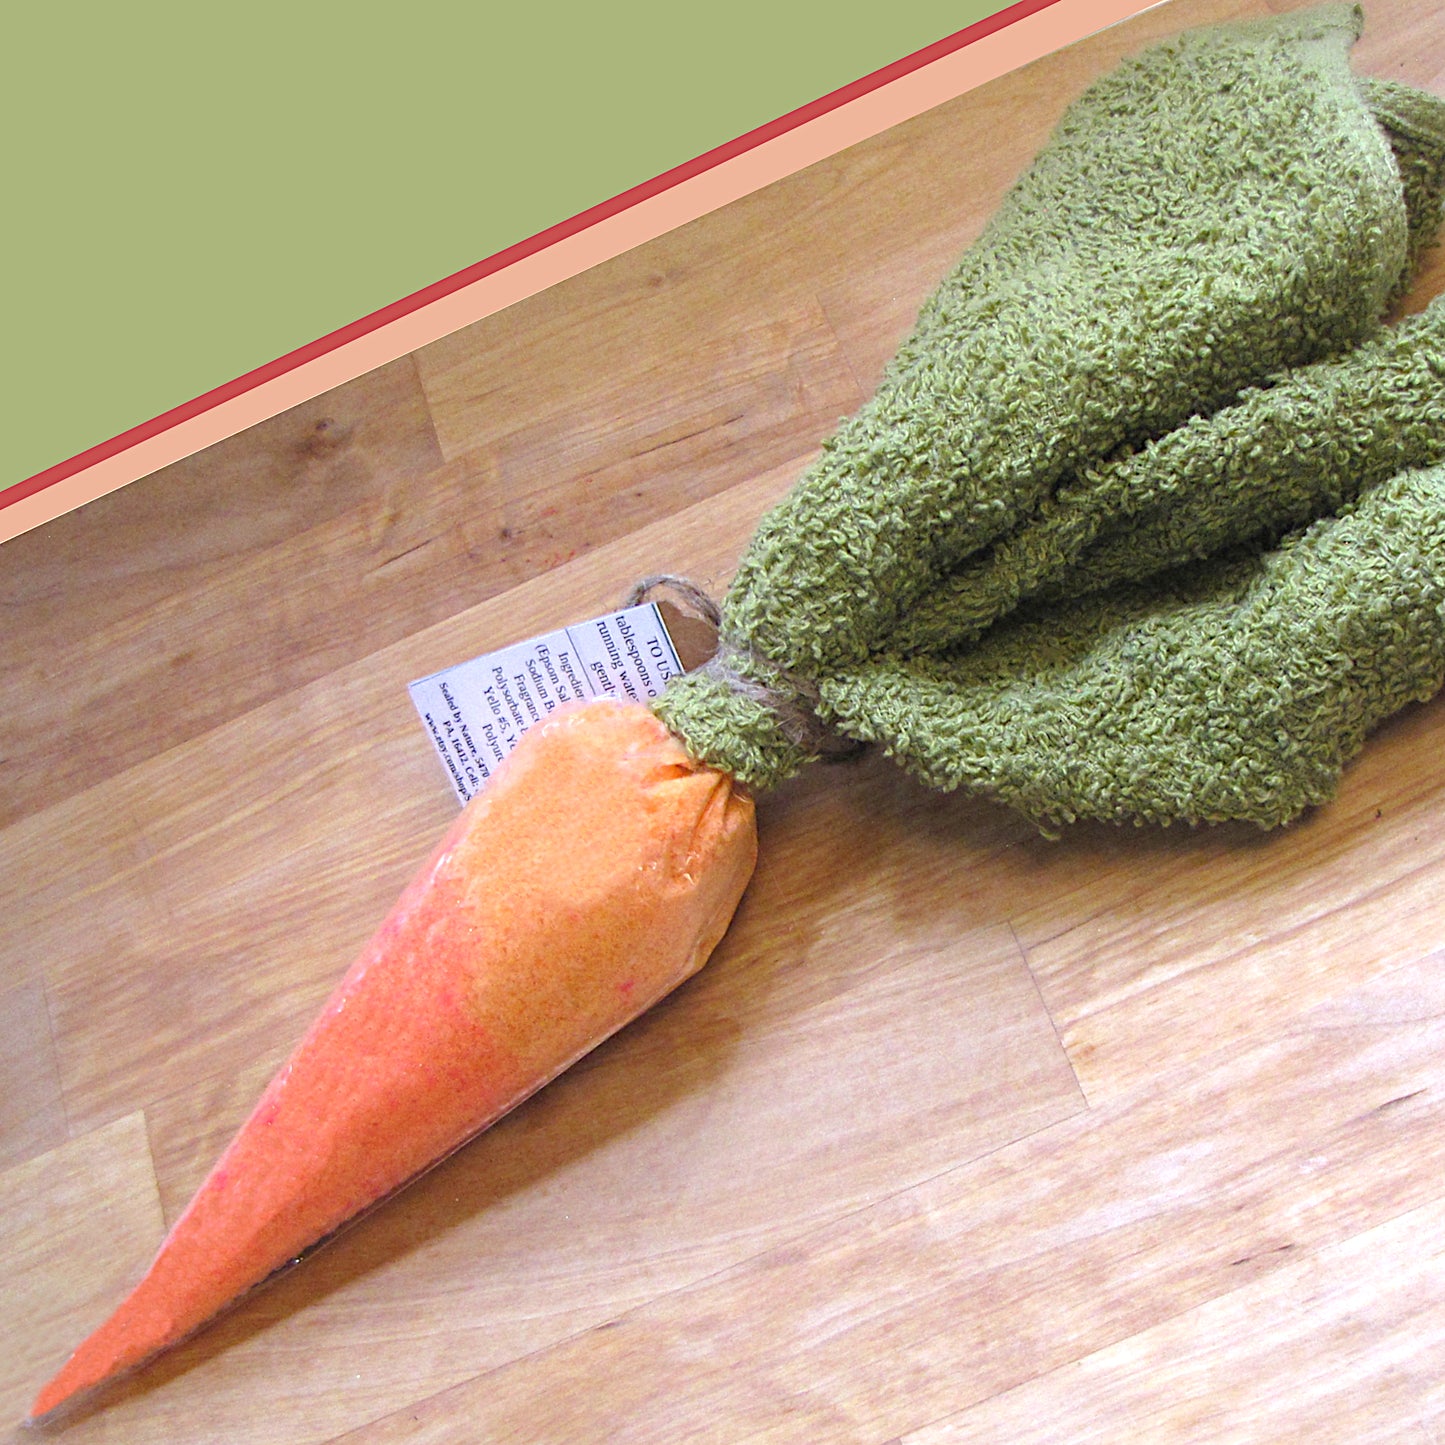 Bath bombs & Salts - Garden Veggies: Peas, Carrots, Cabbage and Tomato